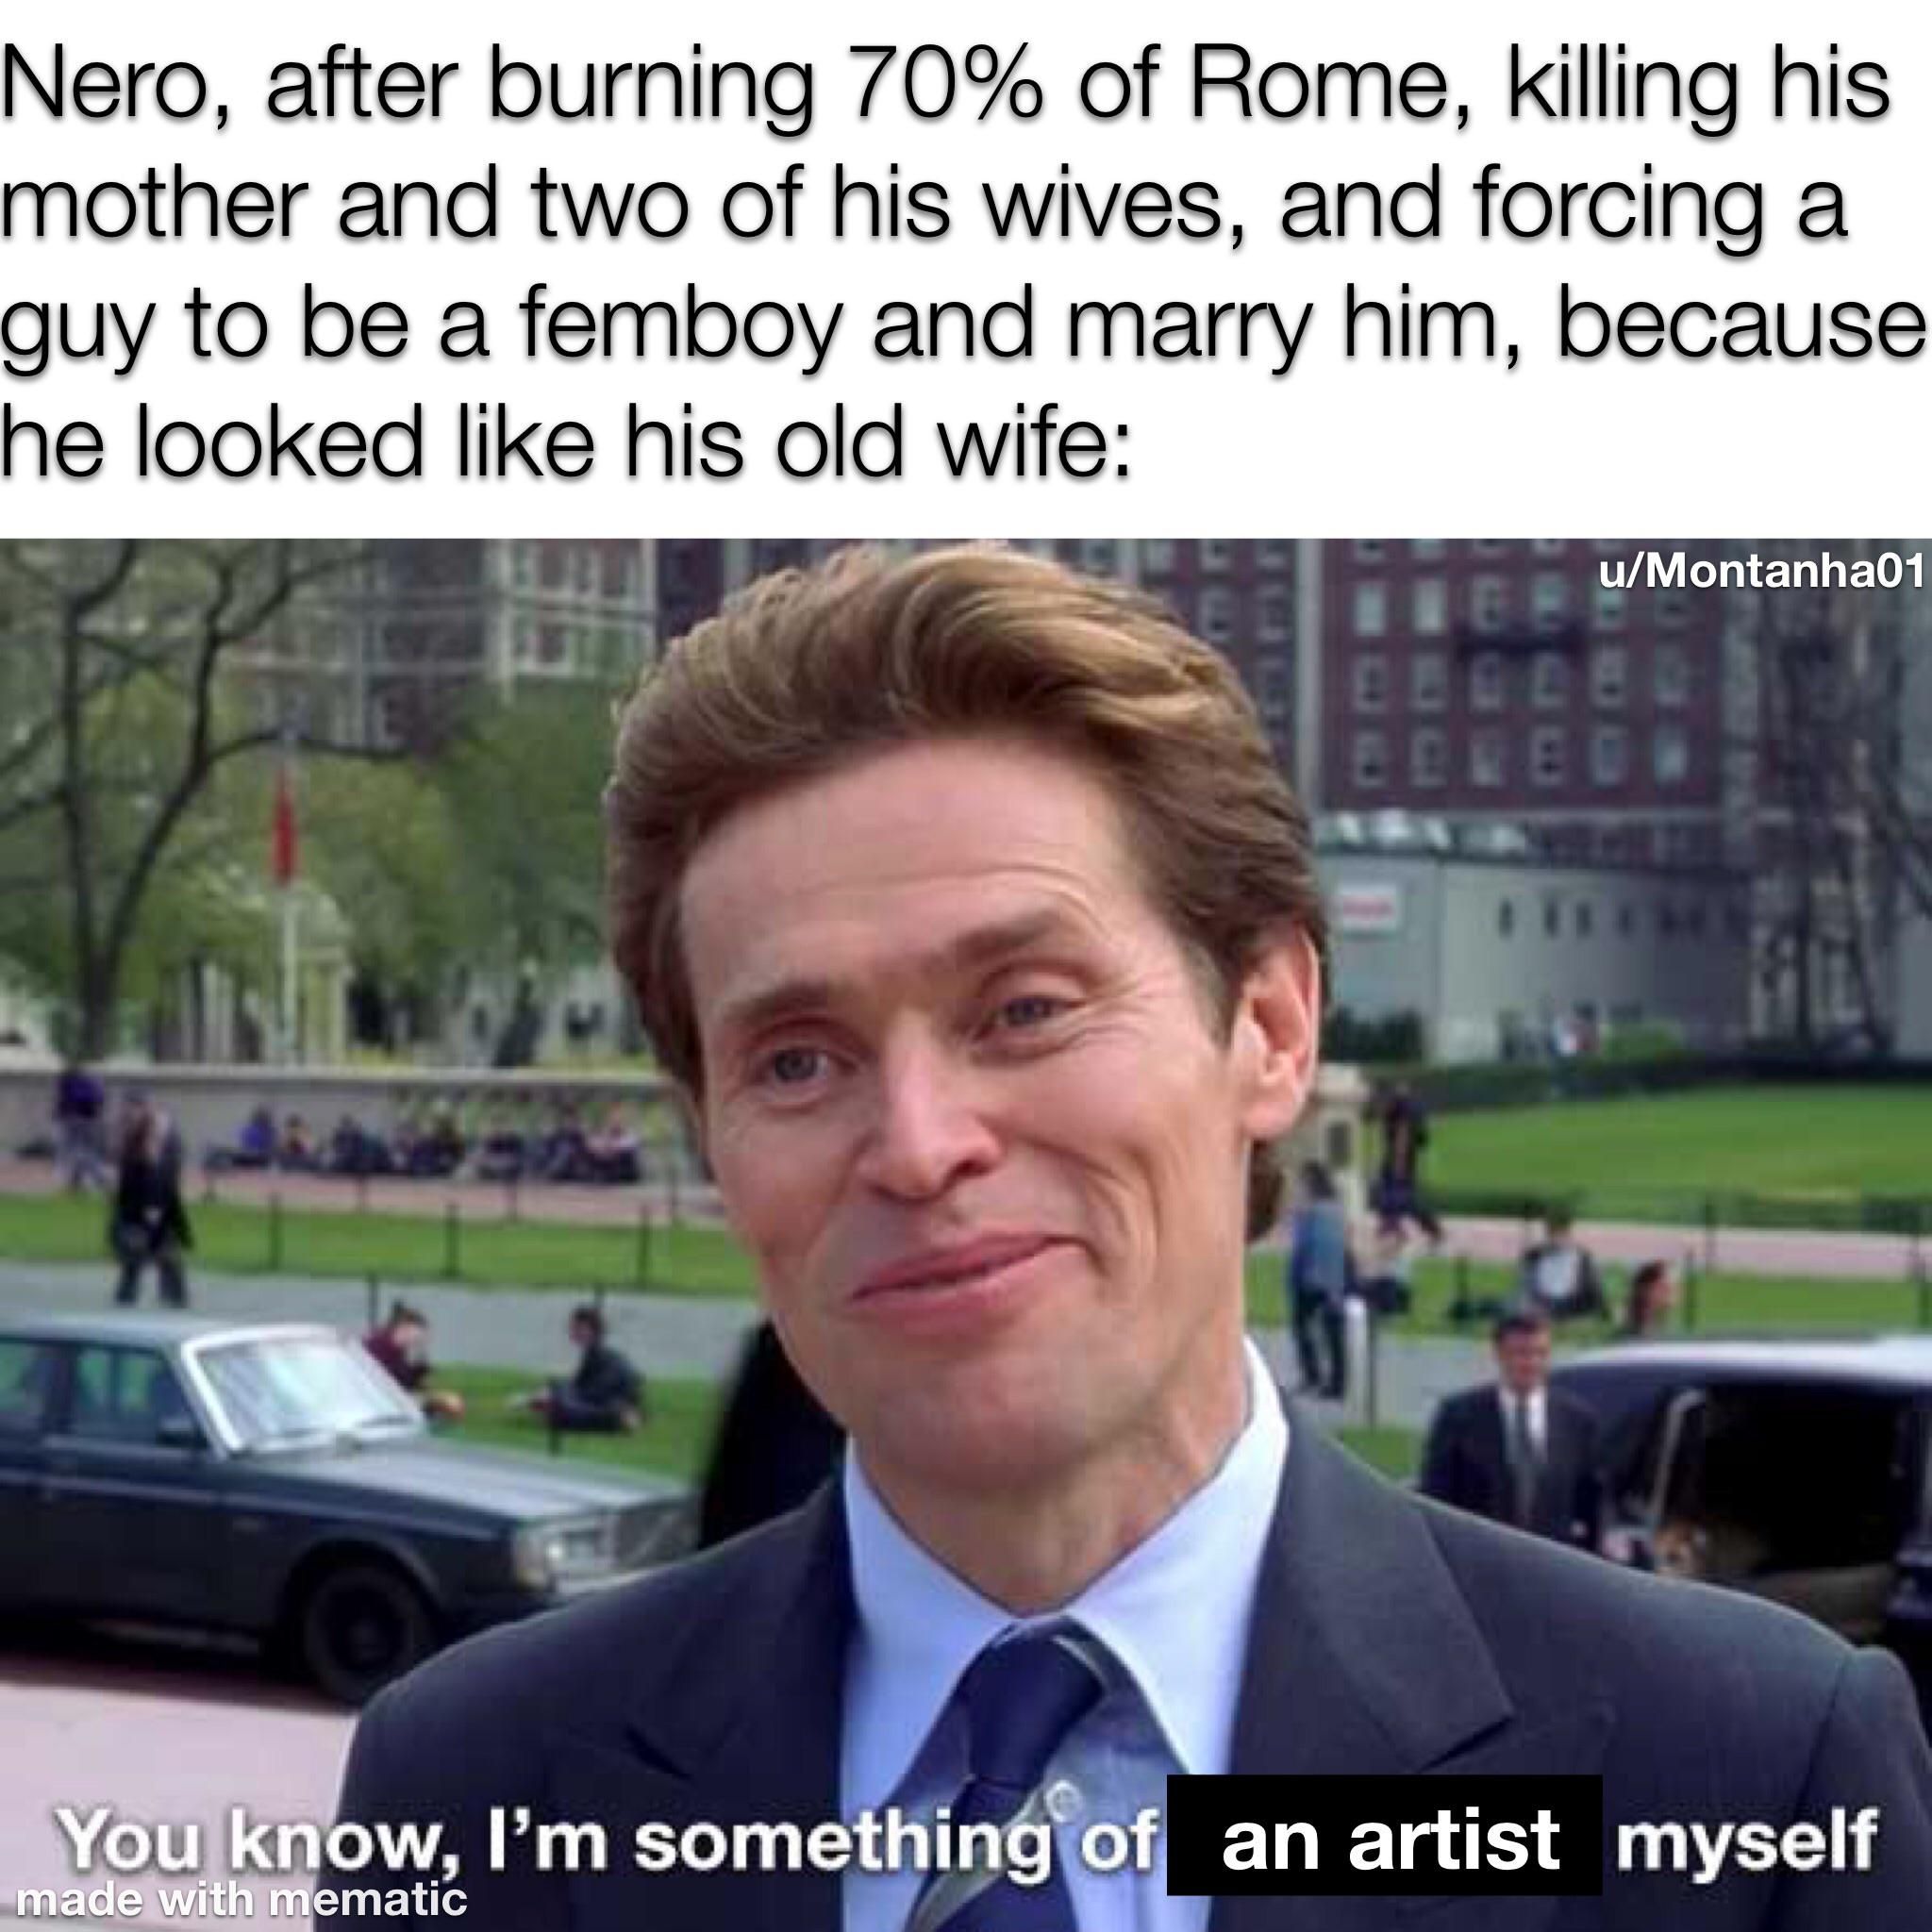 Nero, a misunderstood artist